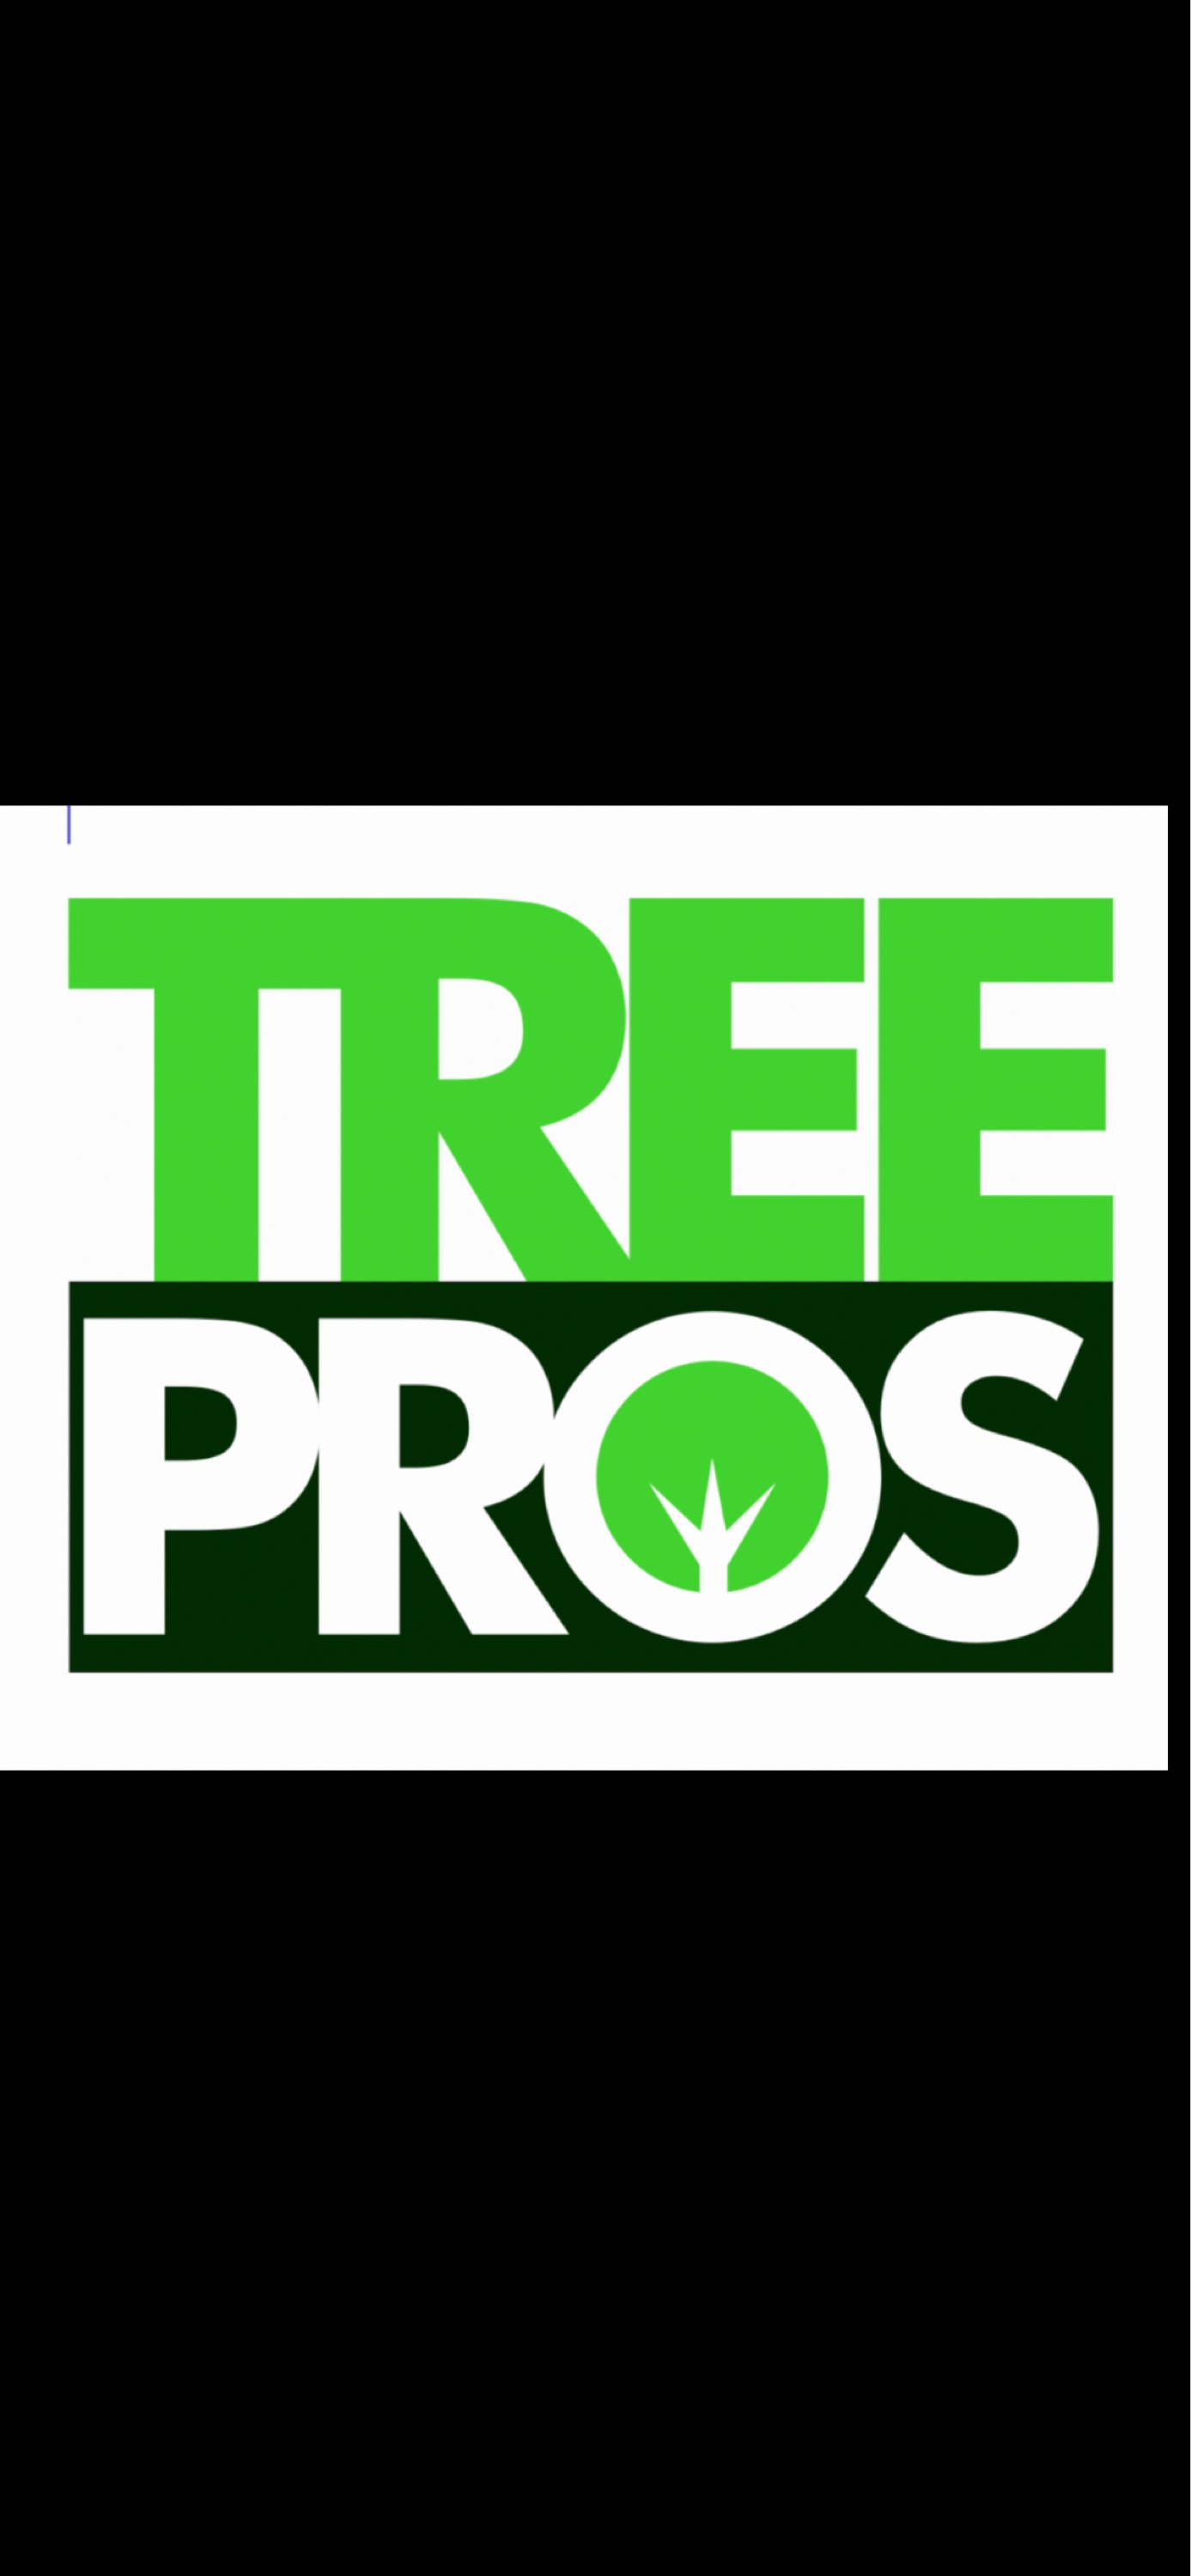 TREE PROS  Facebook Logo